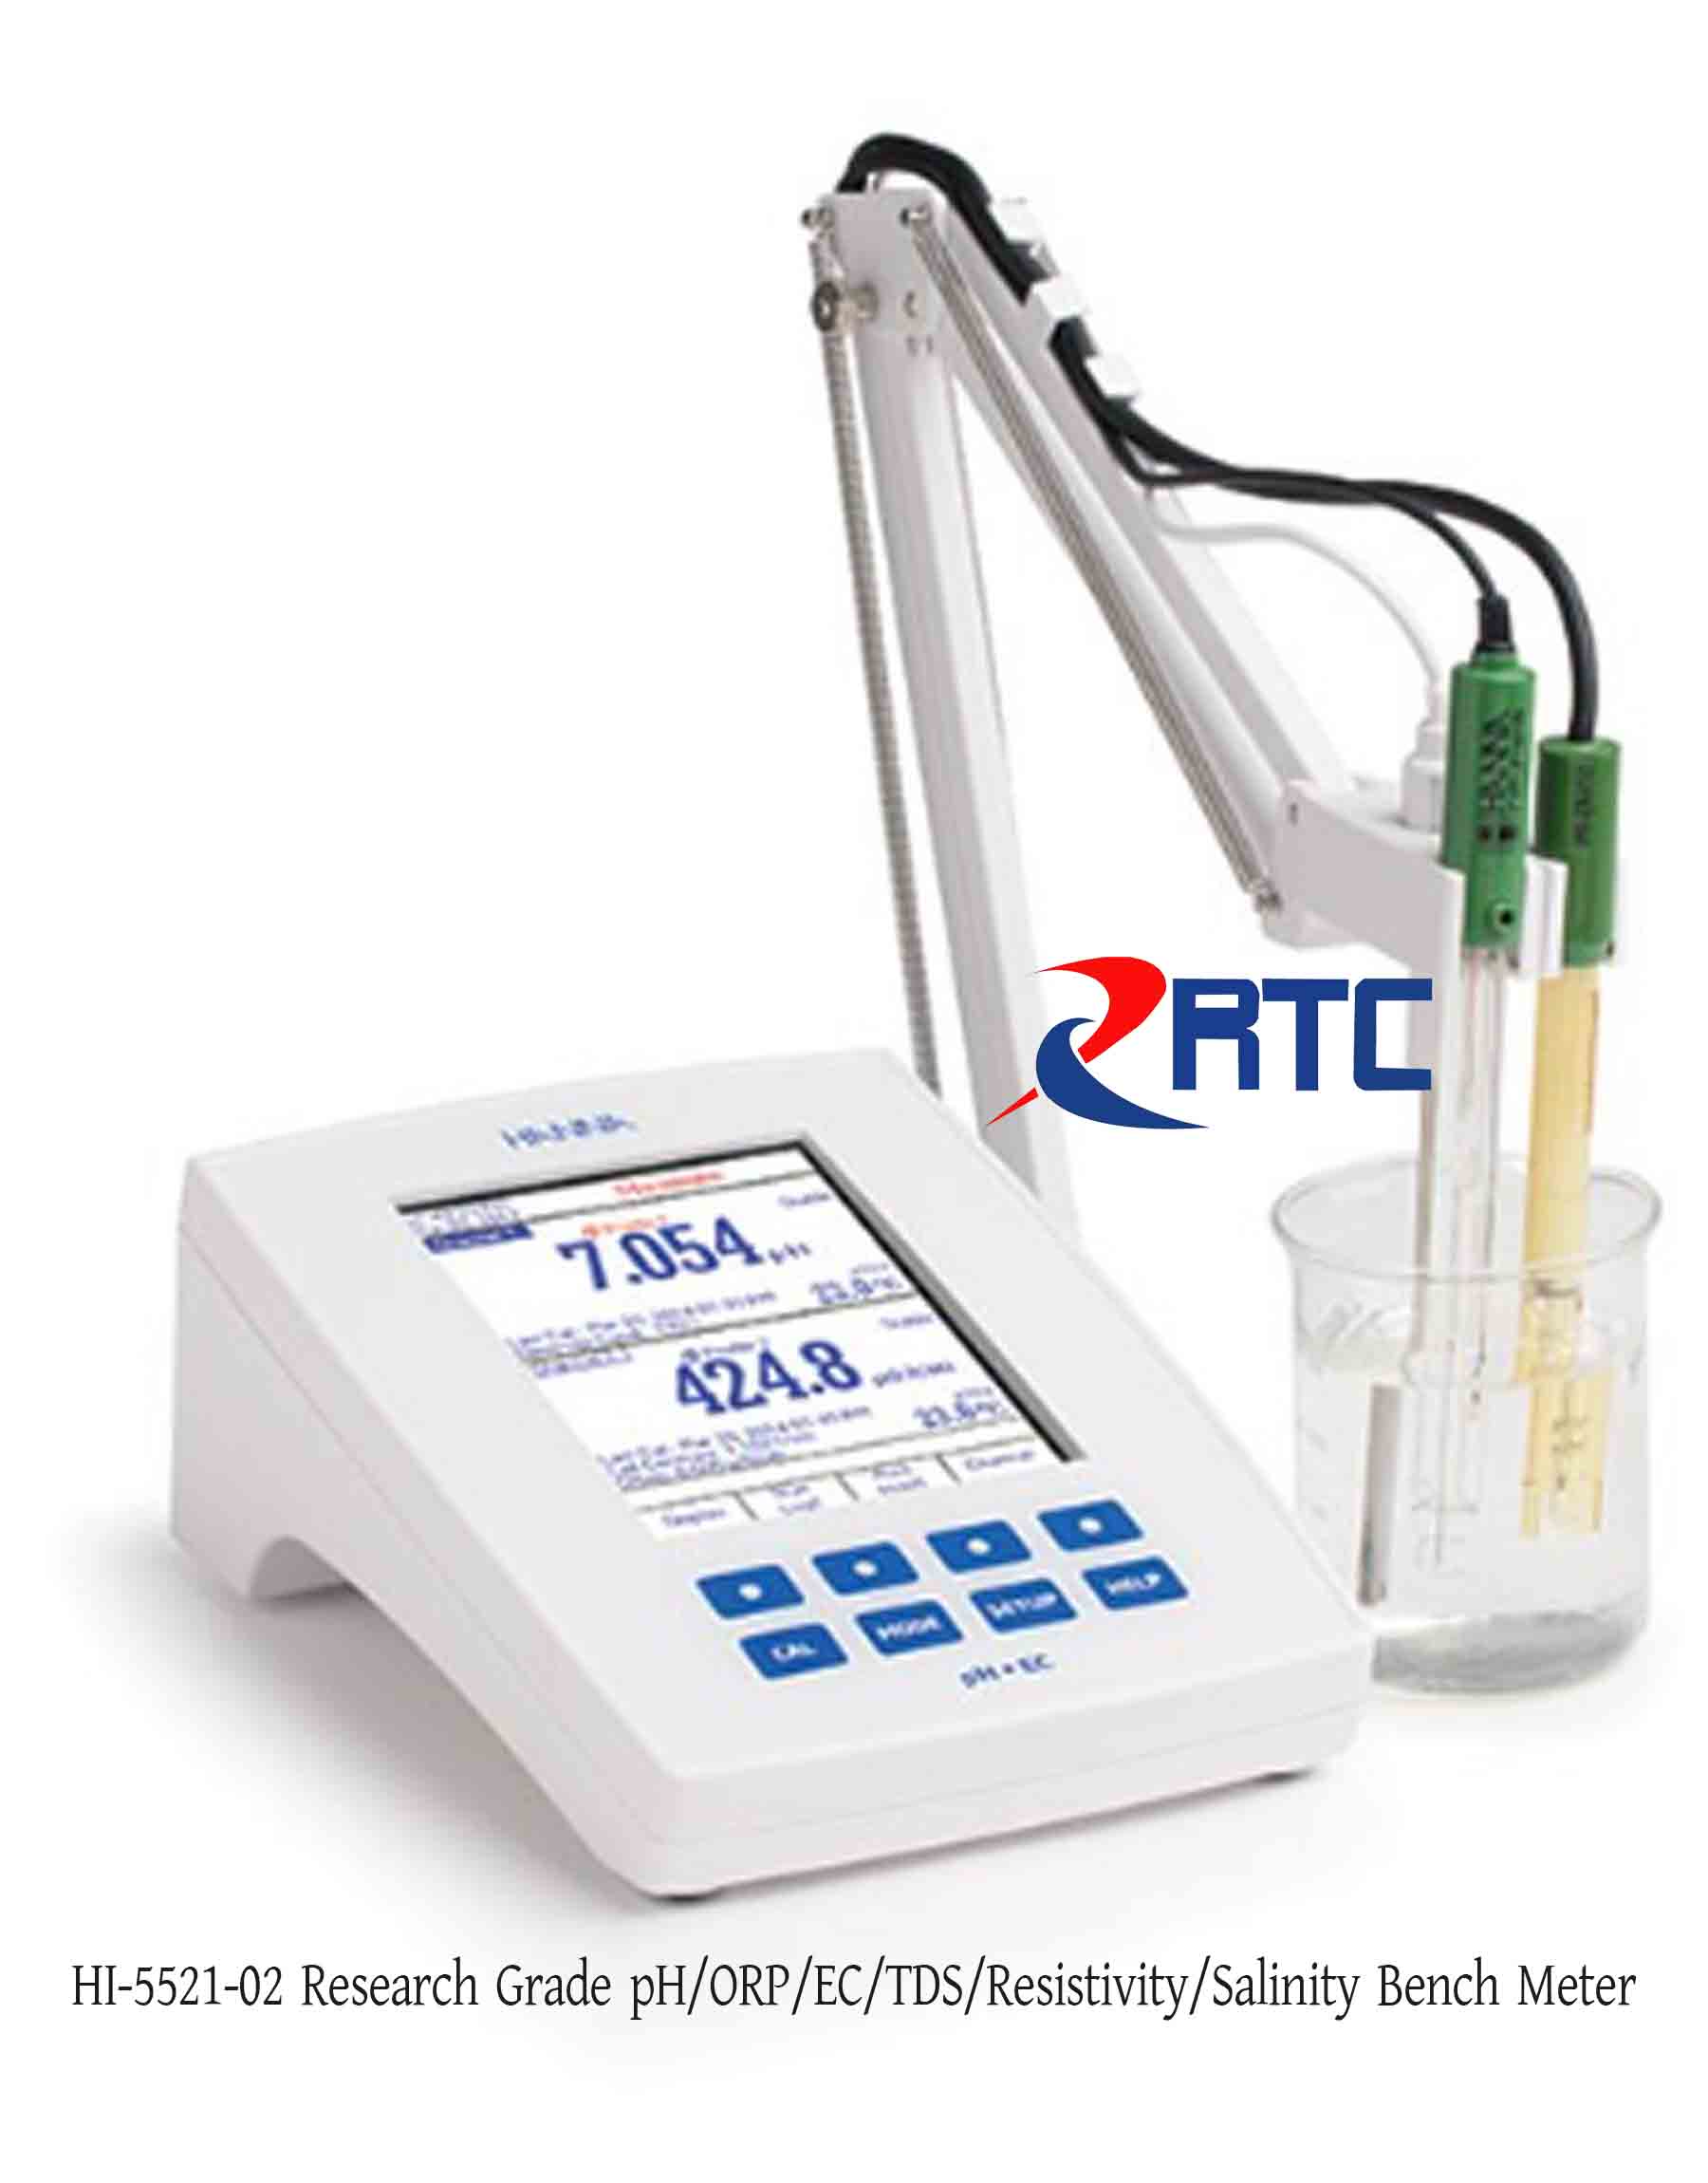 HI-5521-02 Research Grade pH/ORP/EC/TDS/Resistivity/Salinity Bench Meter